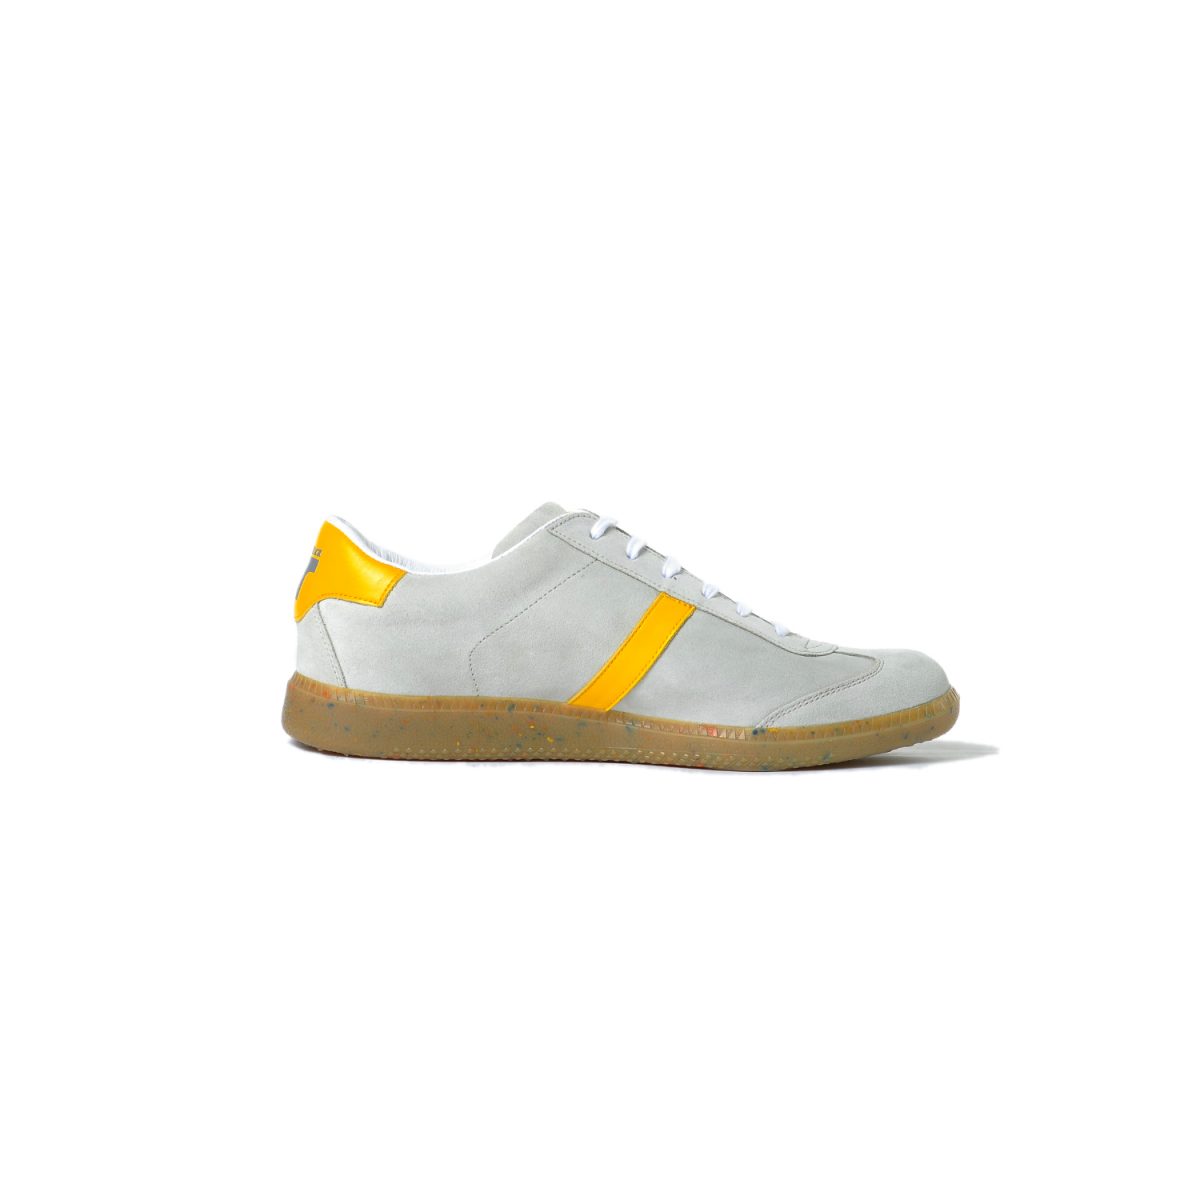 Tisza shoes - Comfort - Off white-yellow